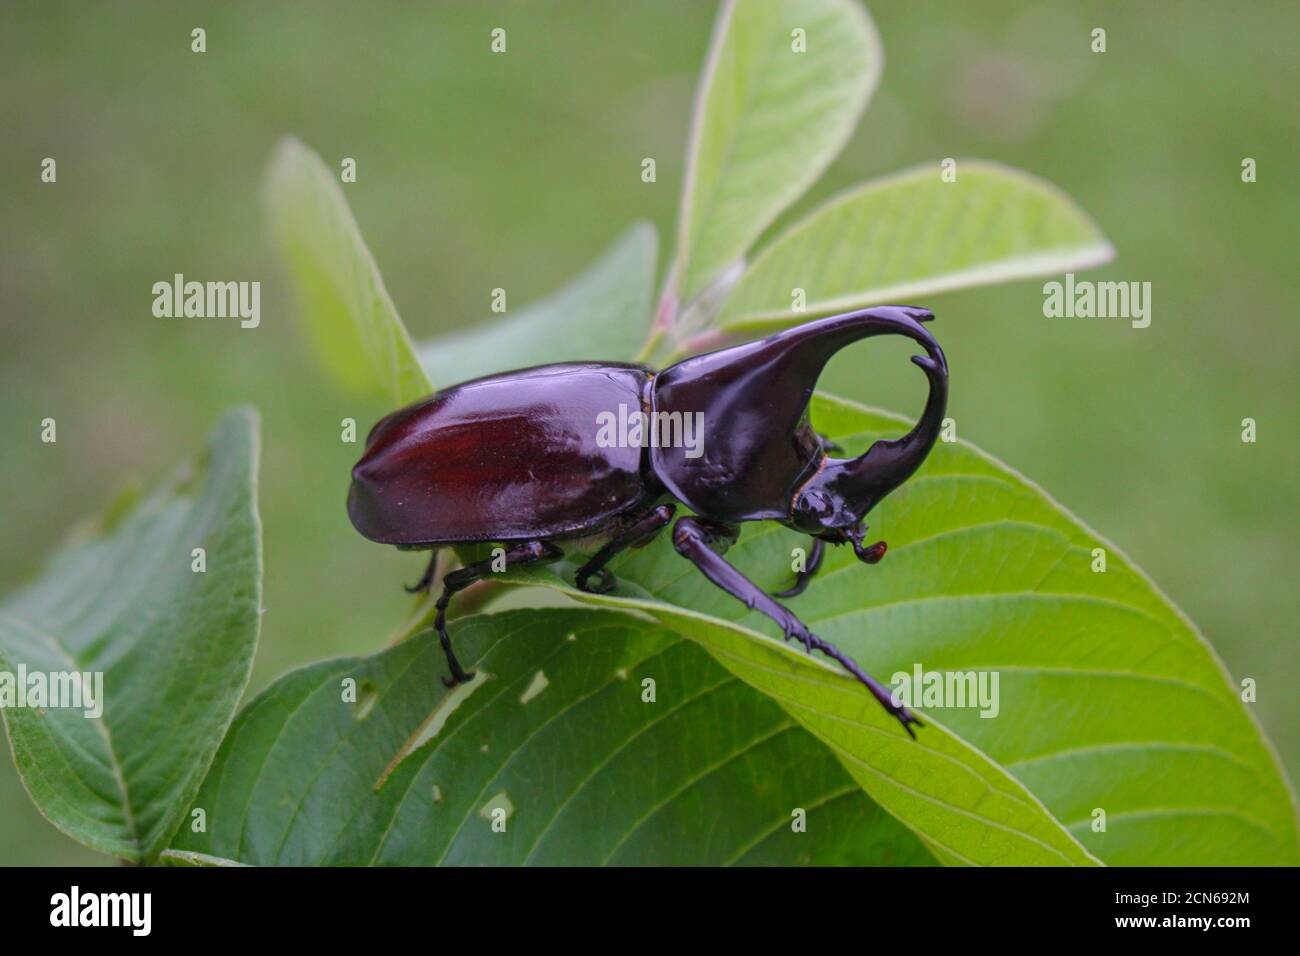 Horn beetlel, Rhino beetlel,Horn beetlel on the leaf in nature Stock Photo